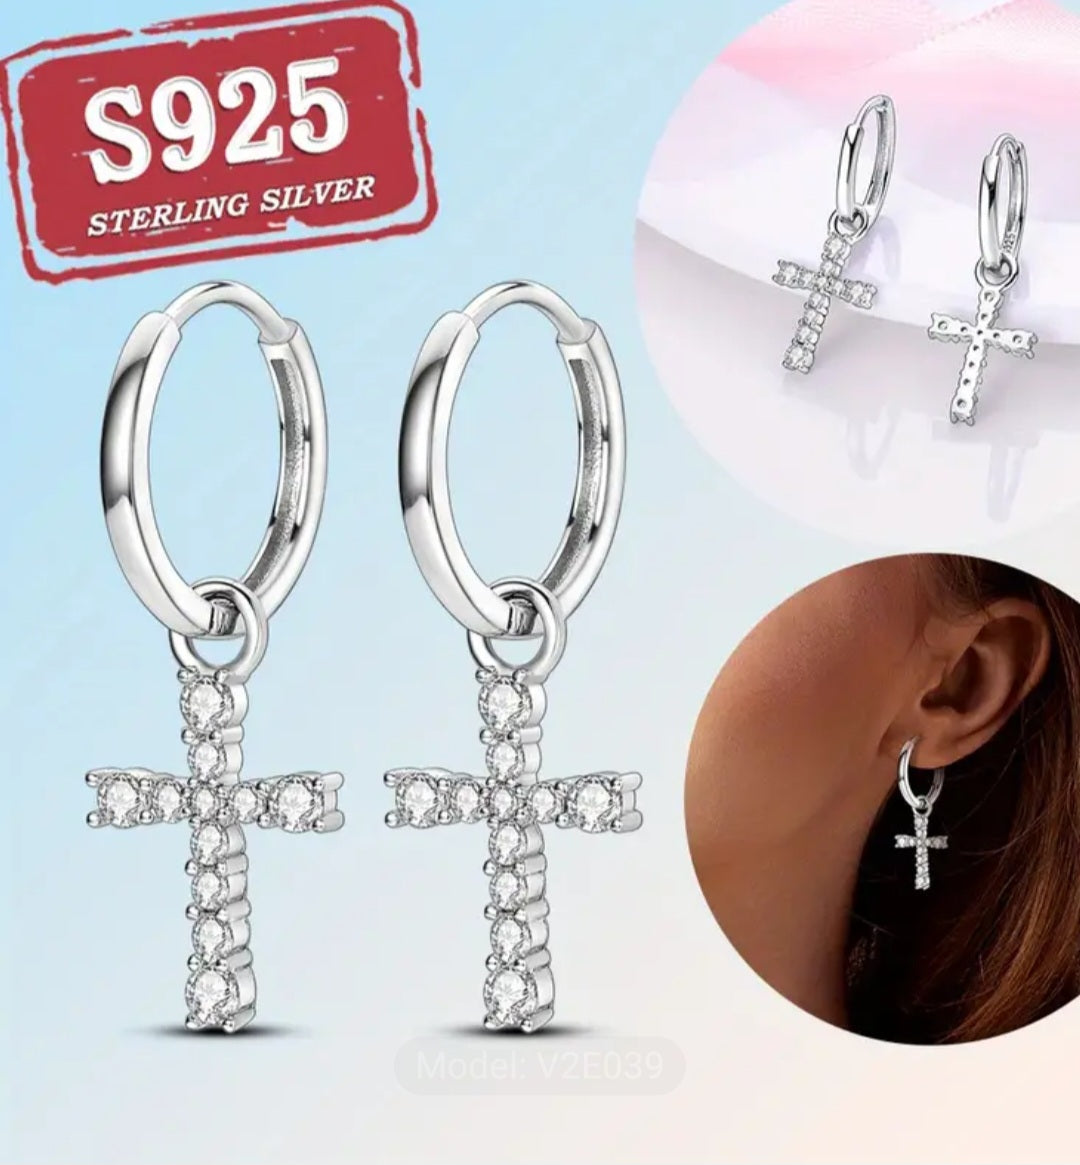 Sterling Silver Dangle Cross Earrings with Rhinestones